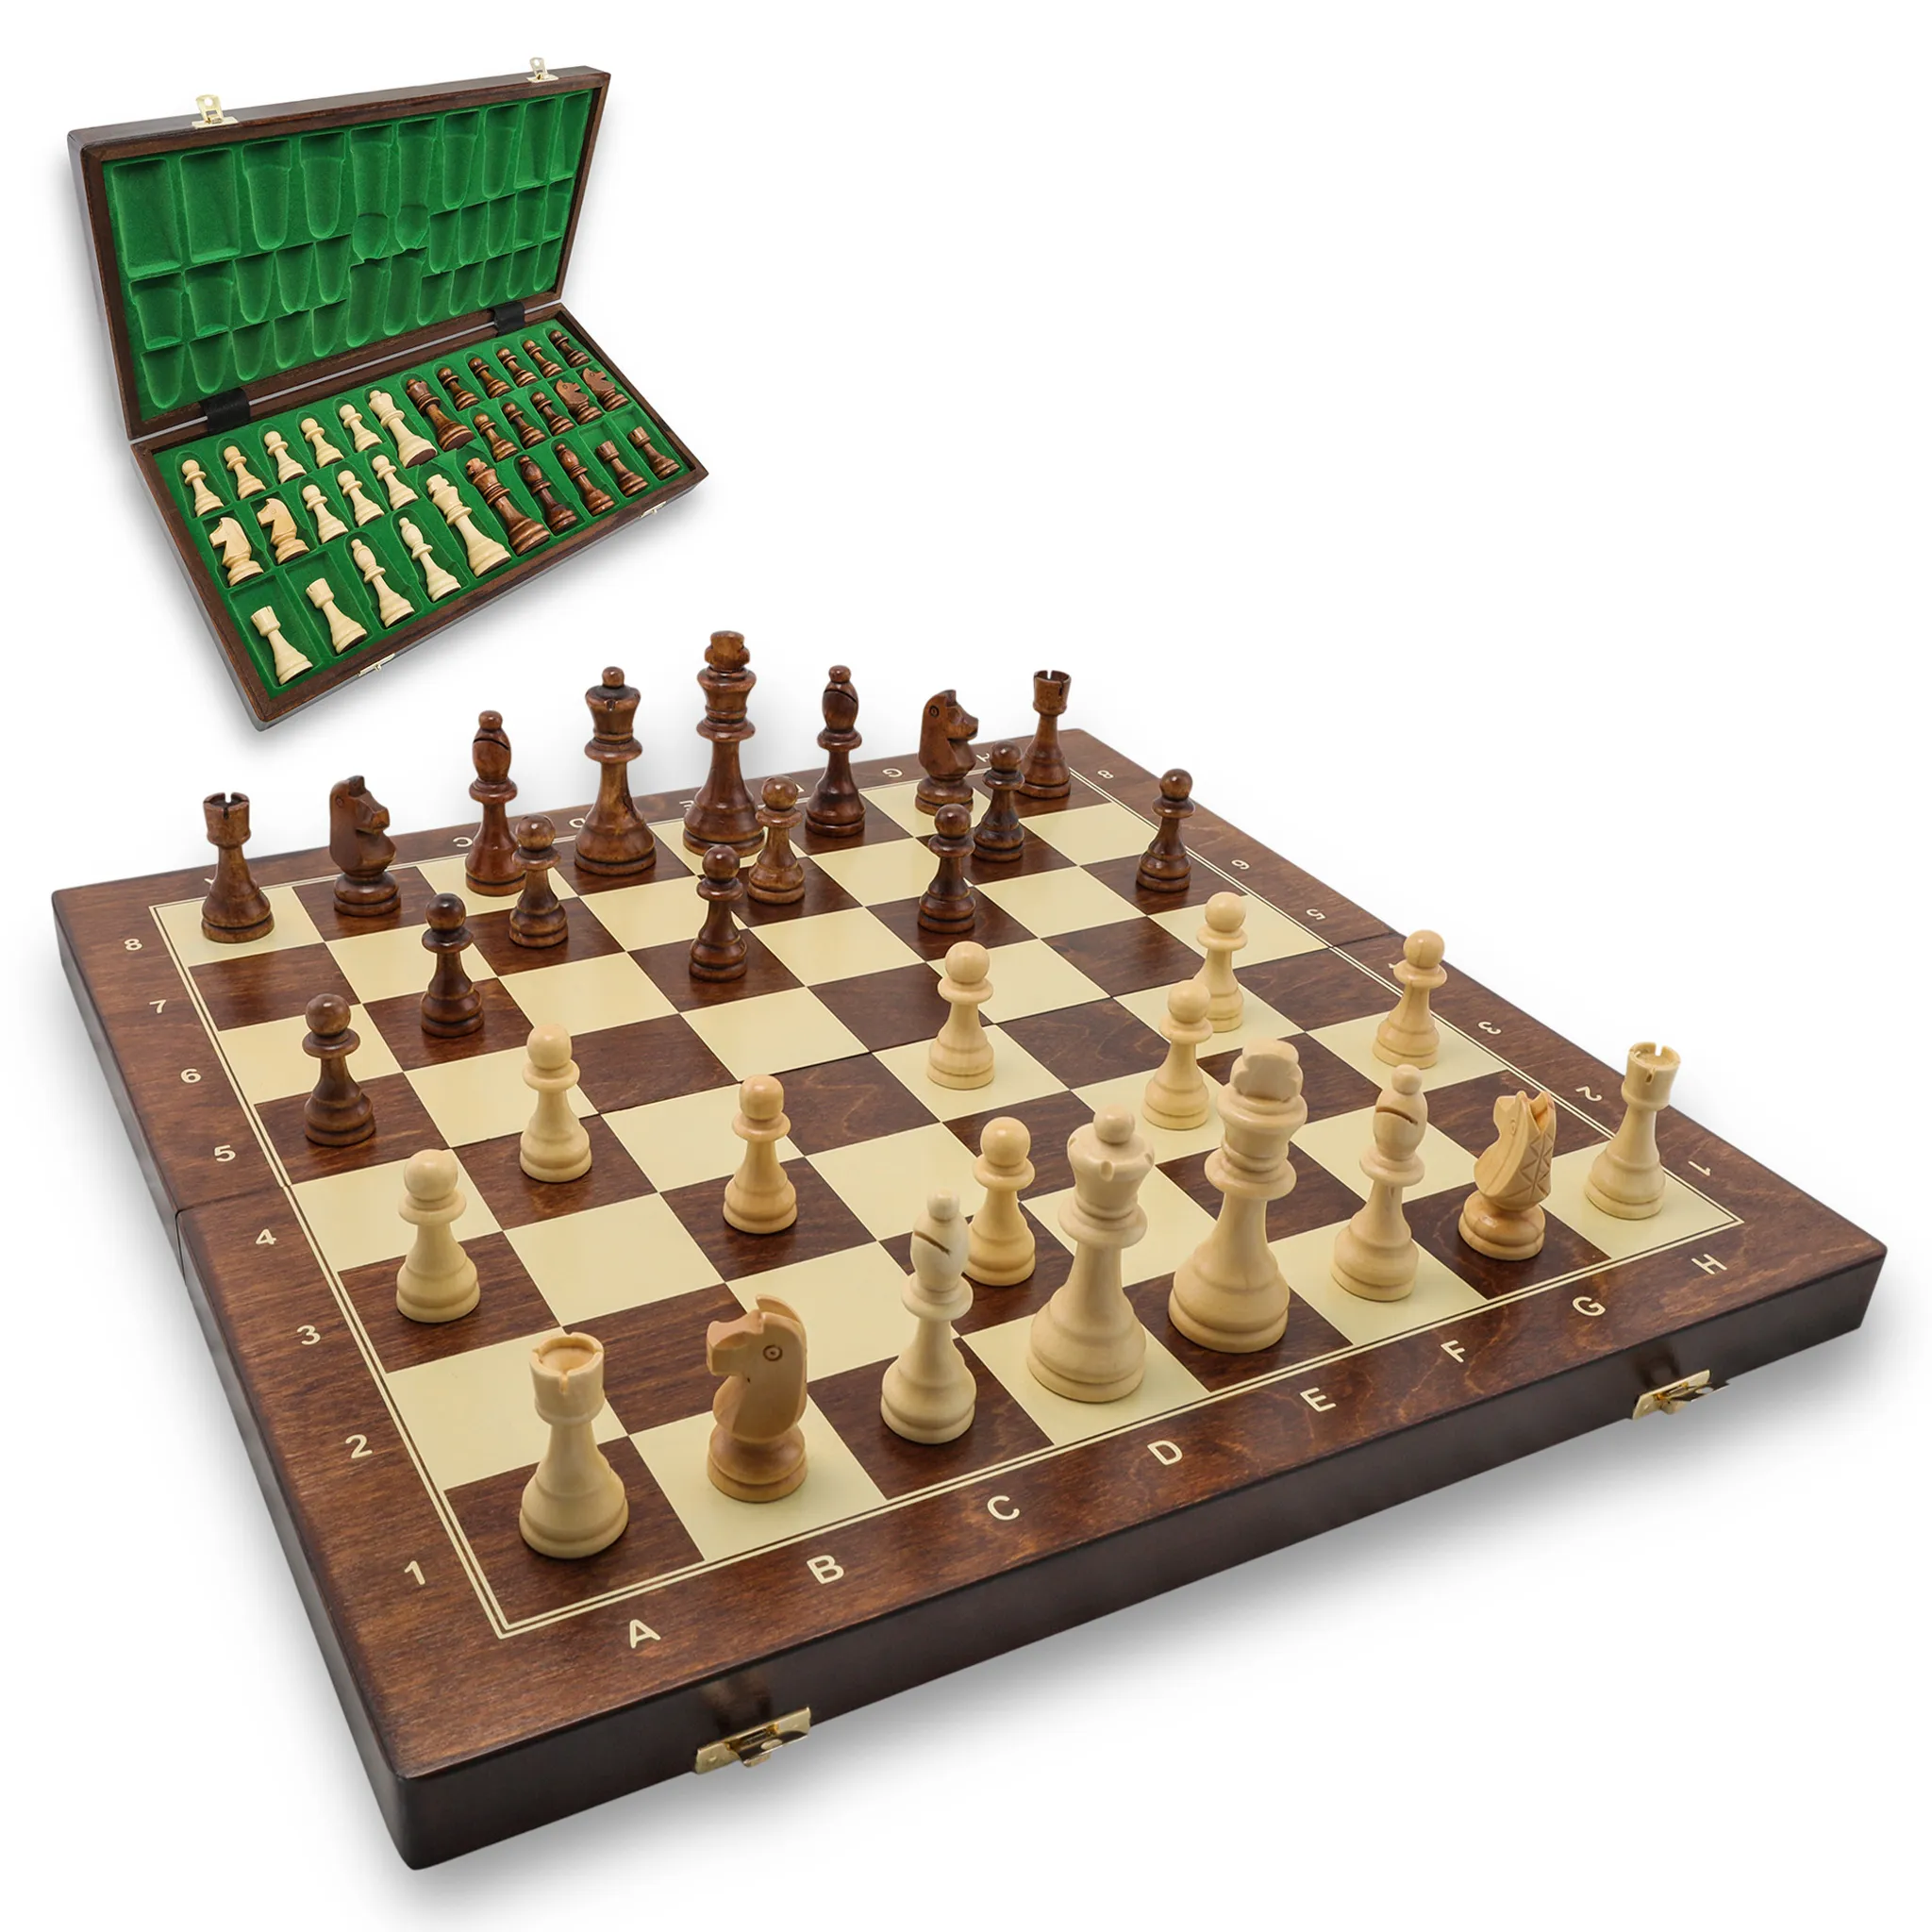 32 Stück Holzschach Spiel Schach Figuren Set Holzschach Set Für